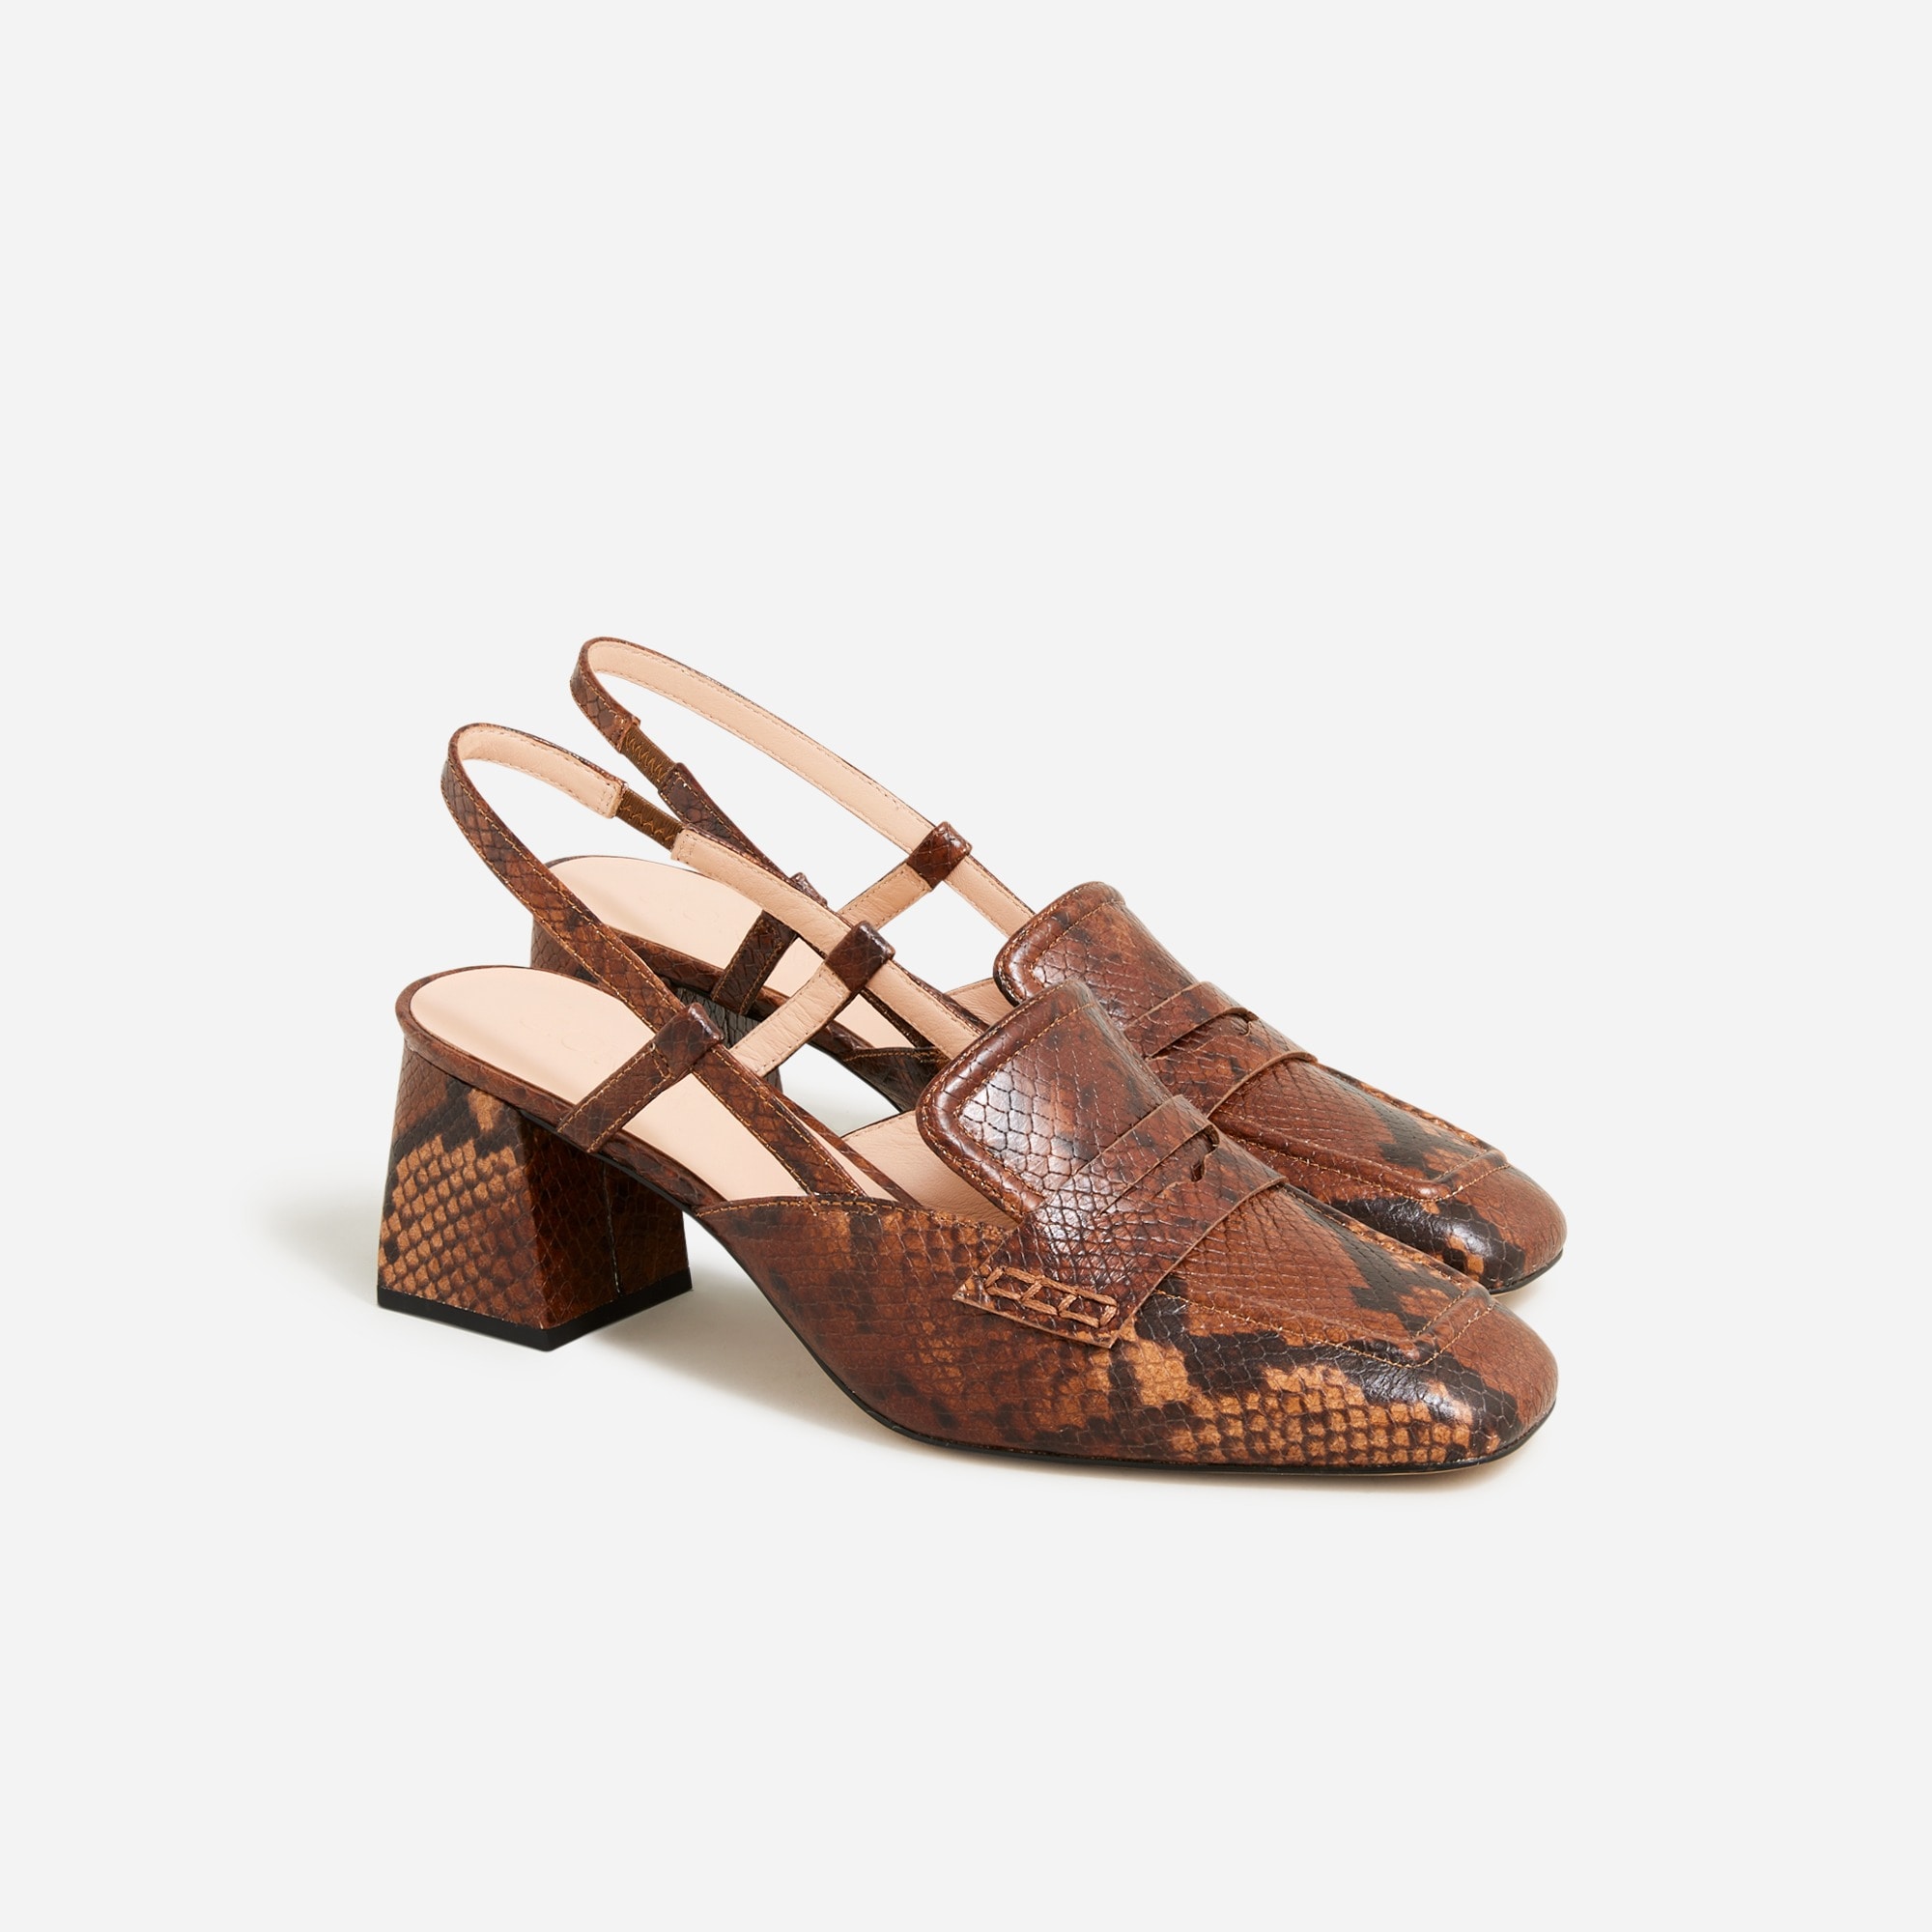  Layne slingback loafer heels in snake-embossed leather